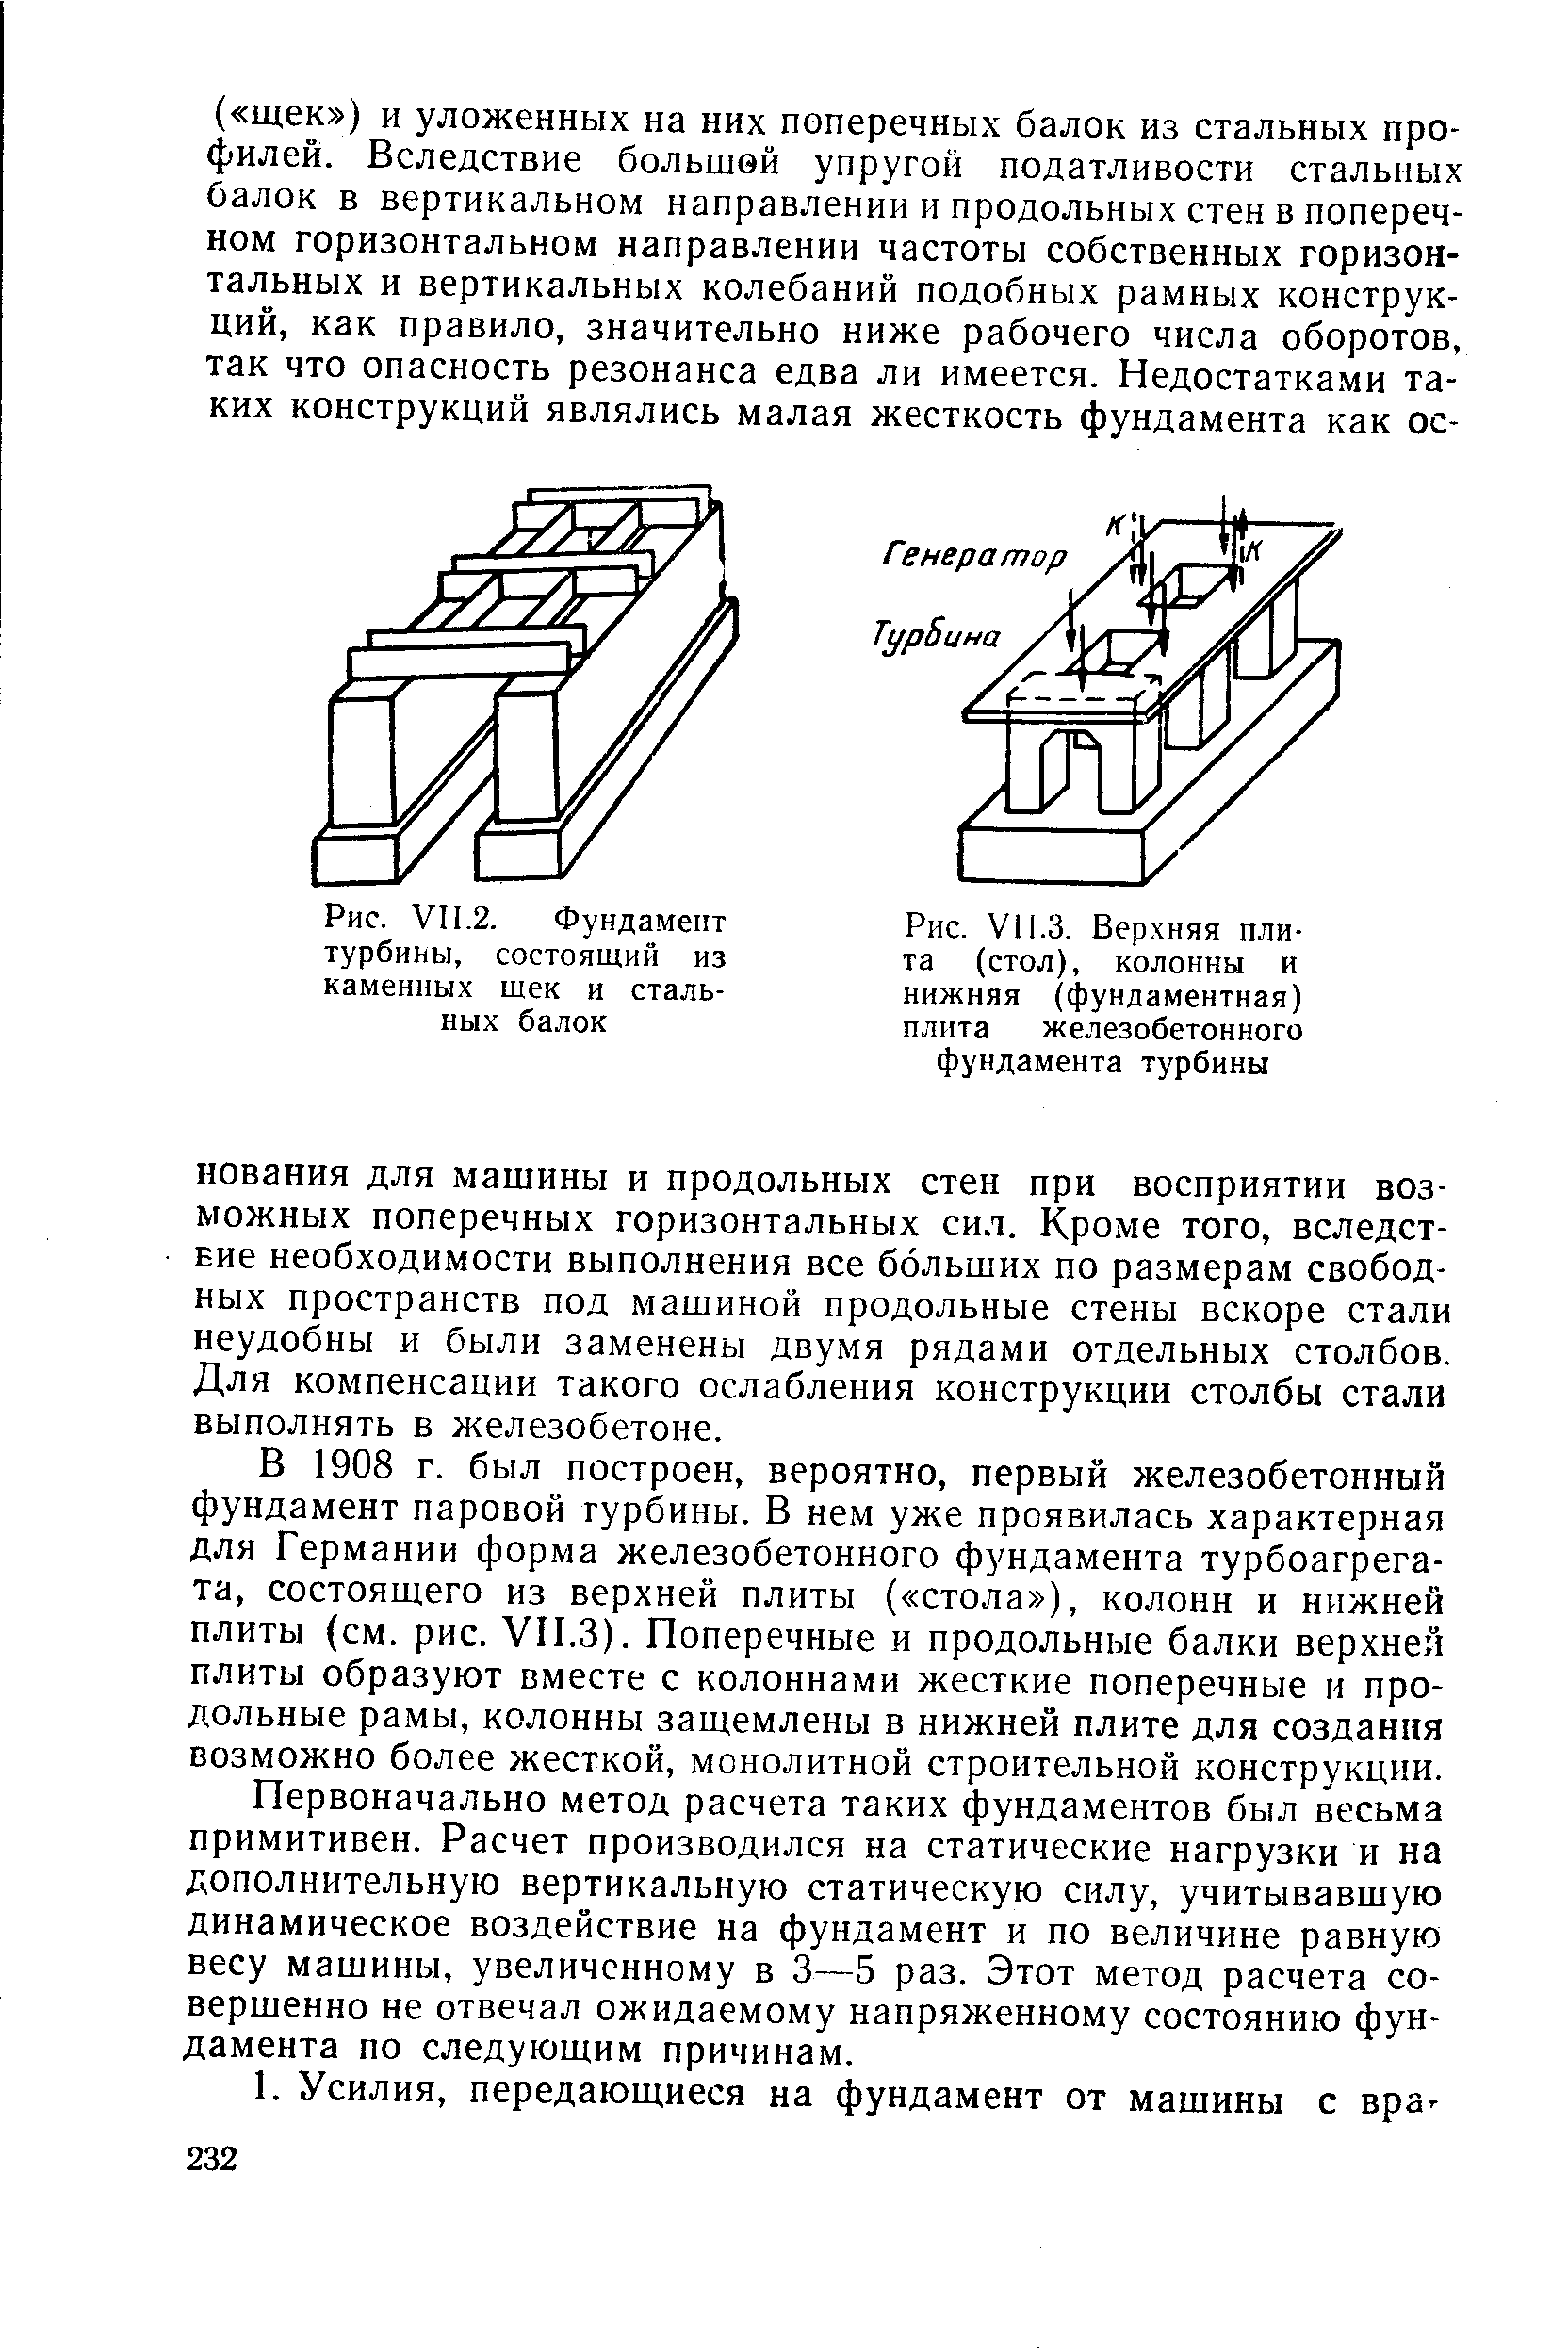 Рис. VI 1.3. Верхняя плита (стол), колонны и нижняя (фундаментная) плита железобетонного фундамента турбины
